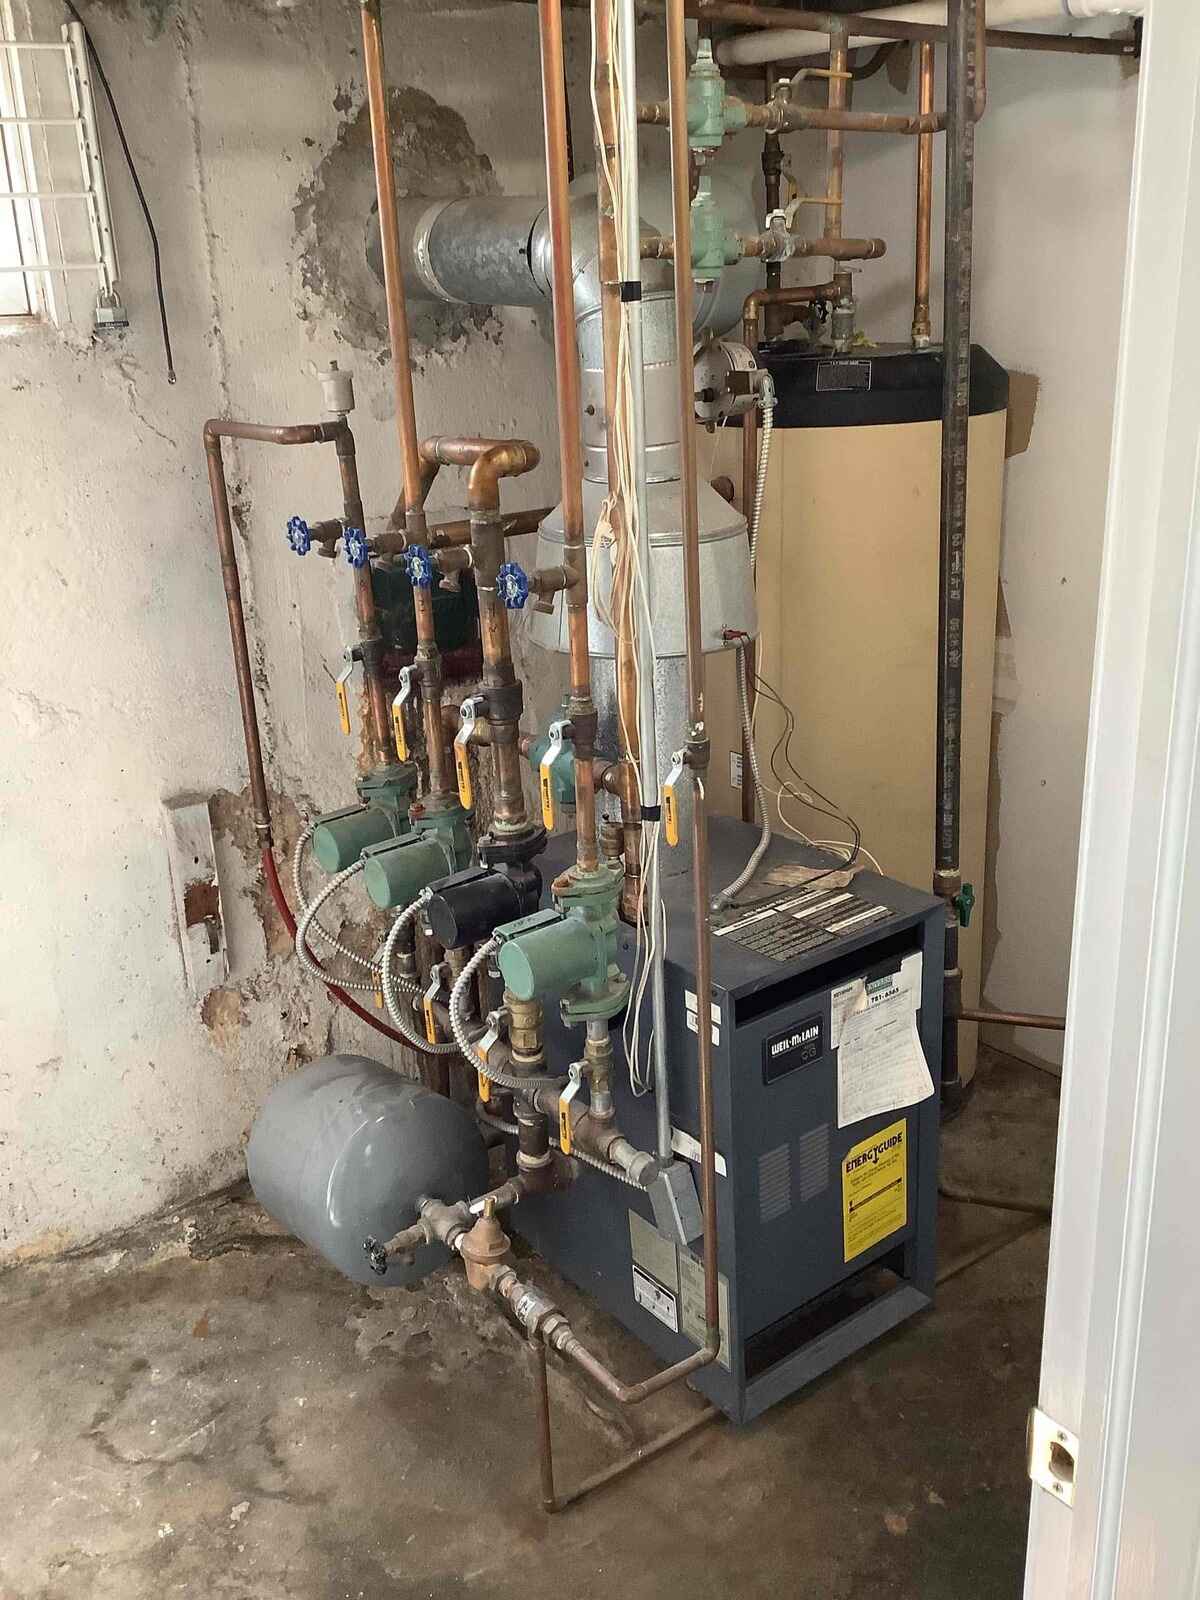 An old boiler in a basement